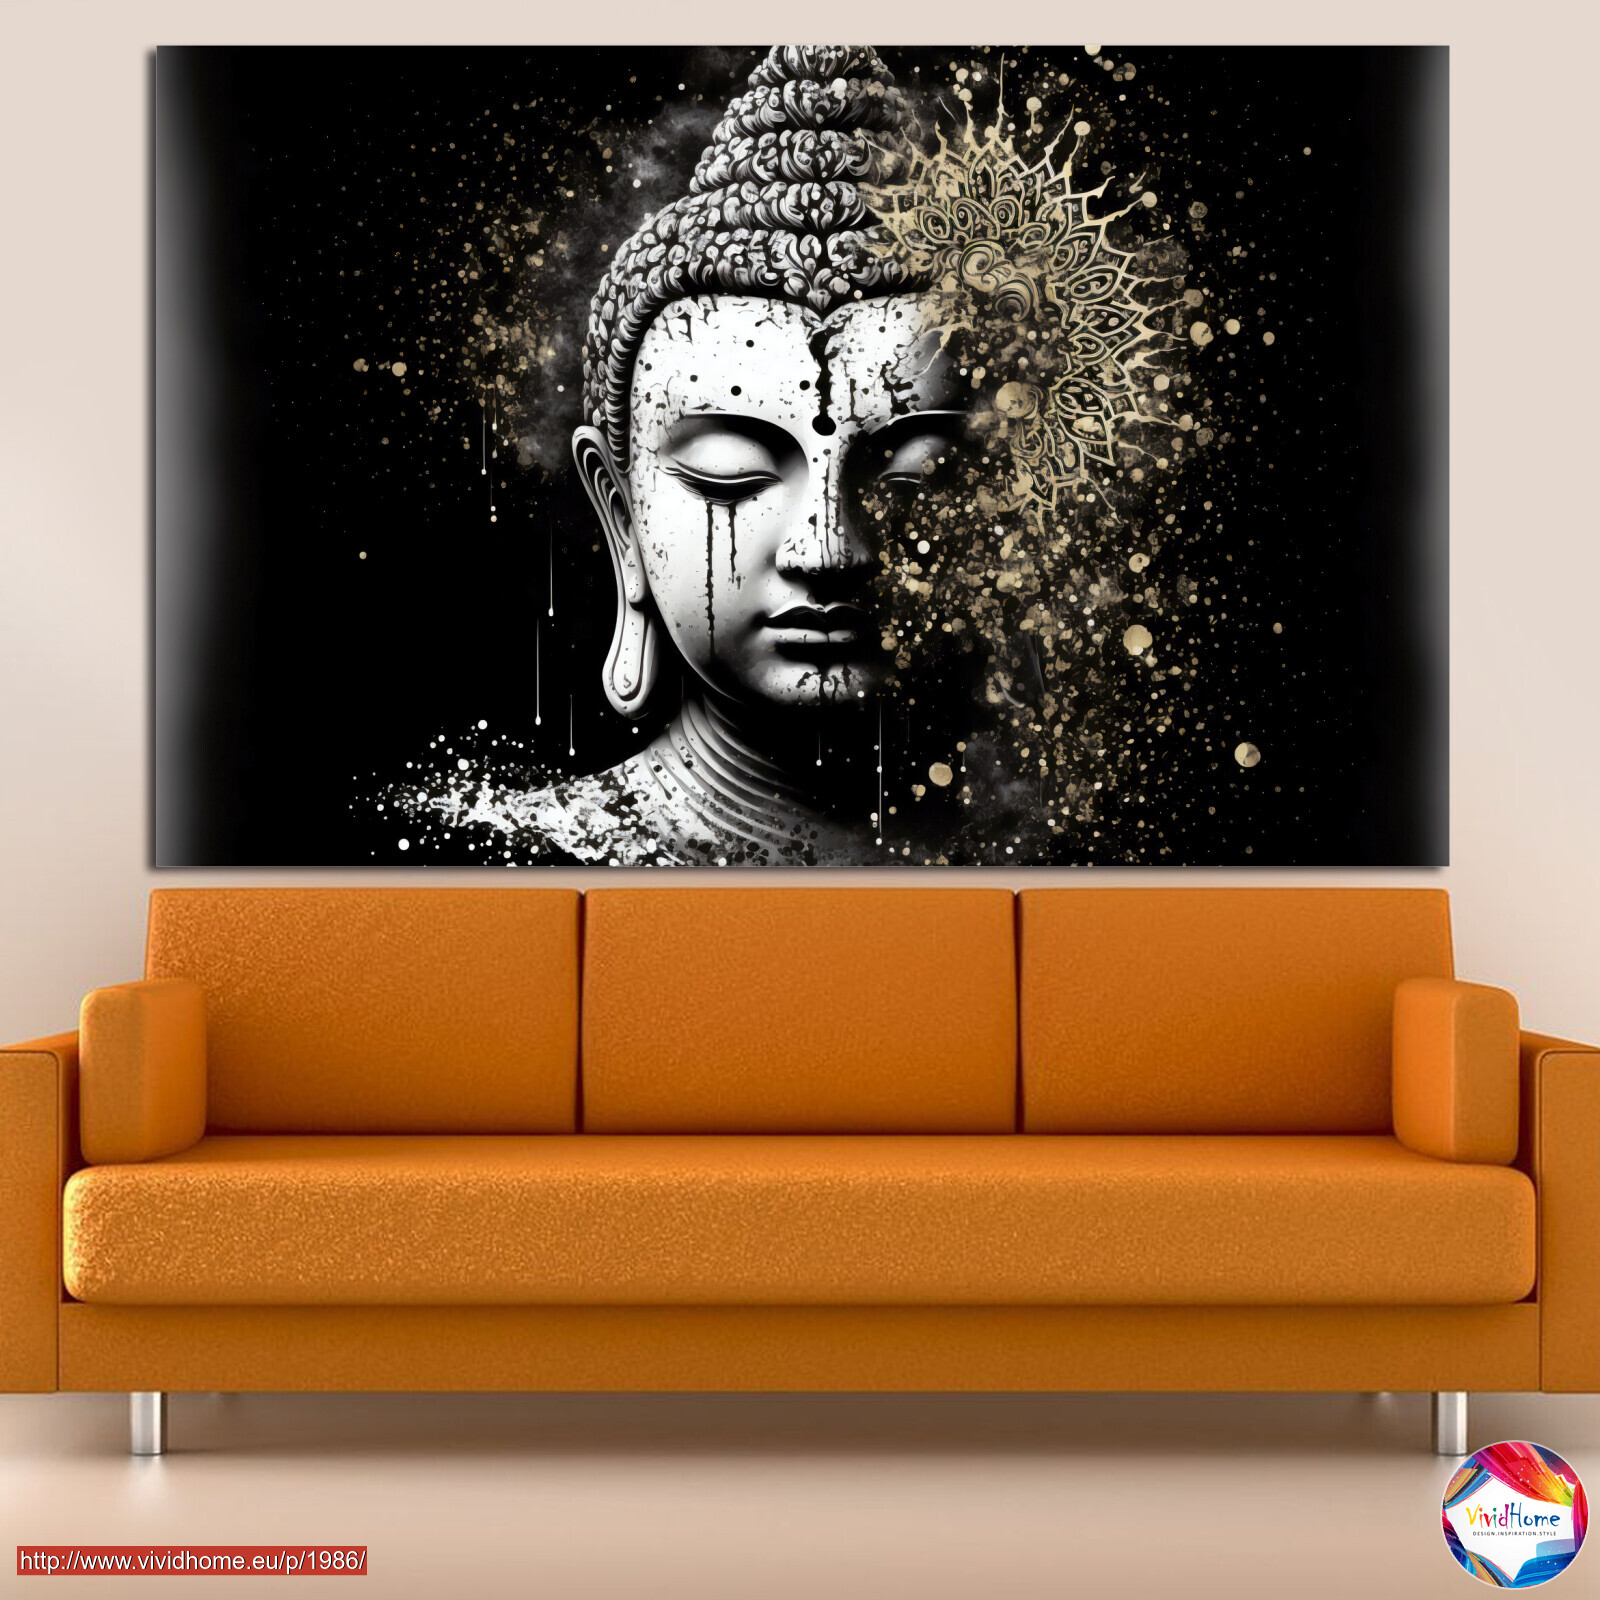 №1001 1 1 of The Spirituality the piece Buddha